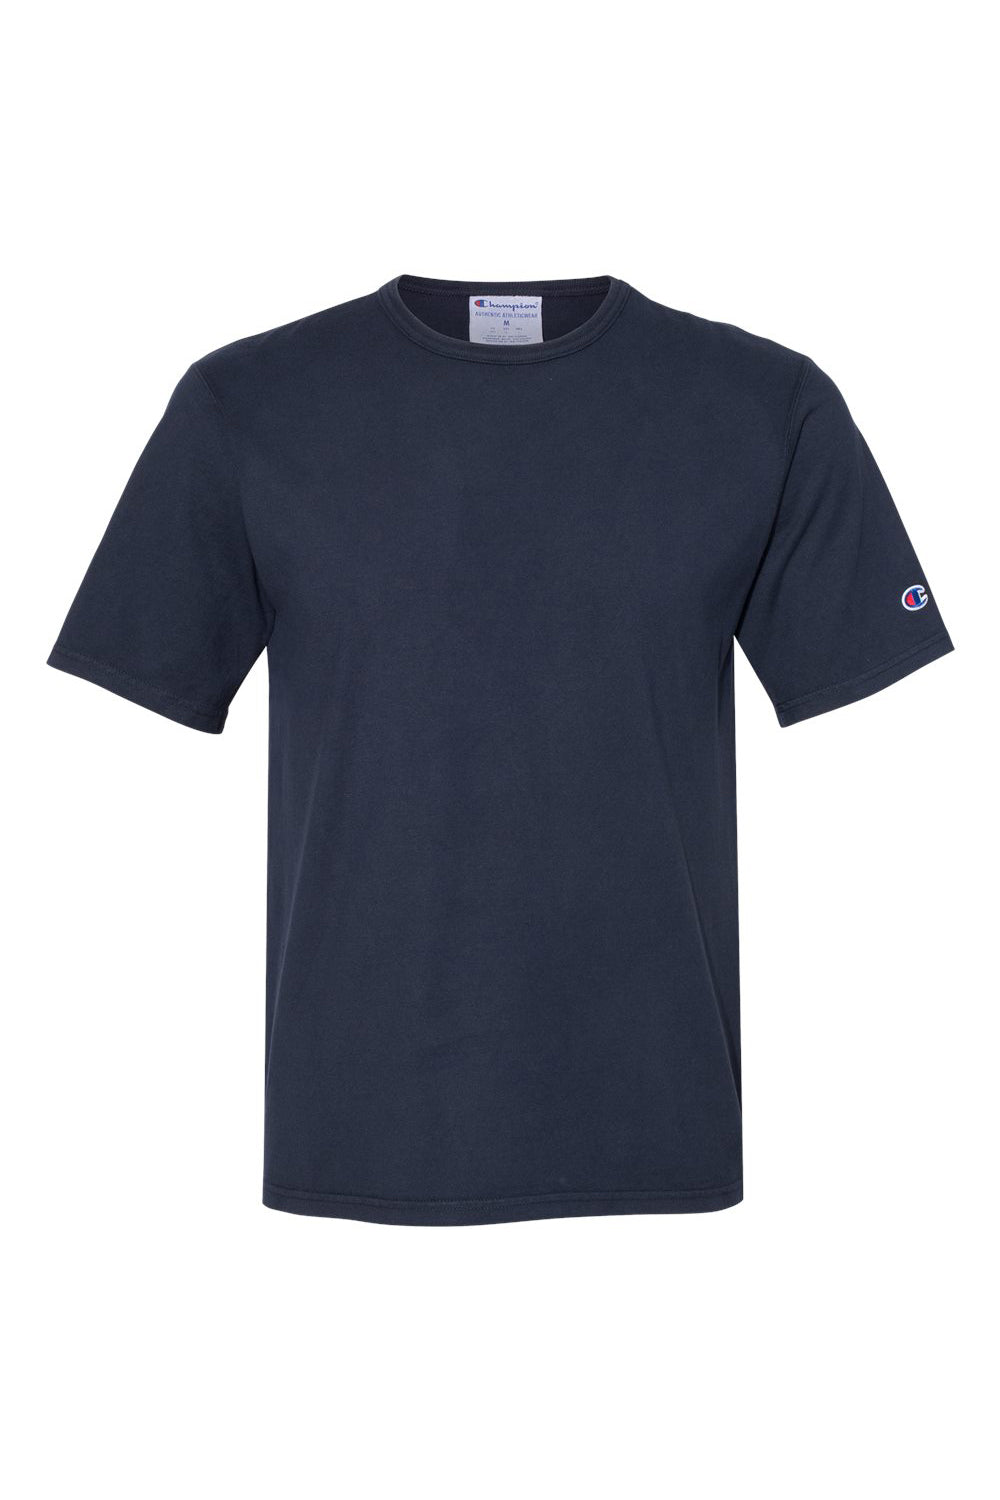 Champion CD100 Mens Garment Dyed Short Sleeve Crewneck T-Shirt Navy Blue Flat Front